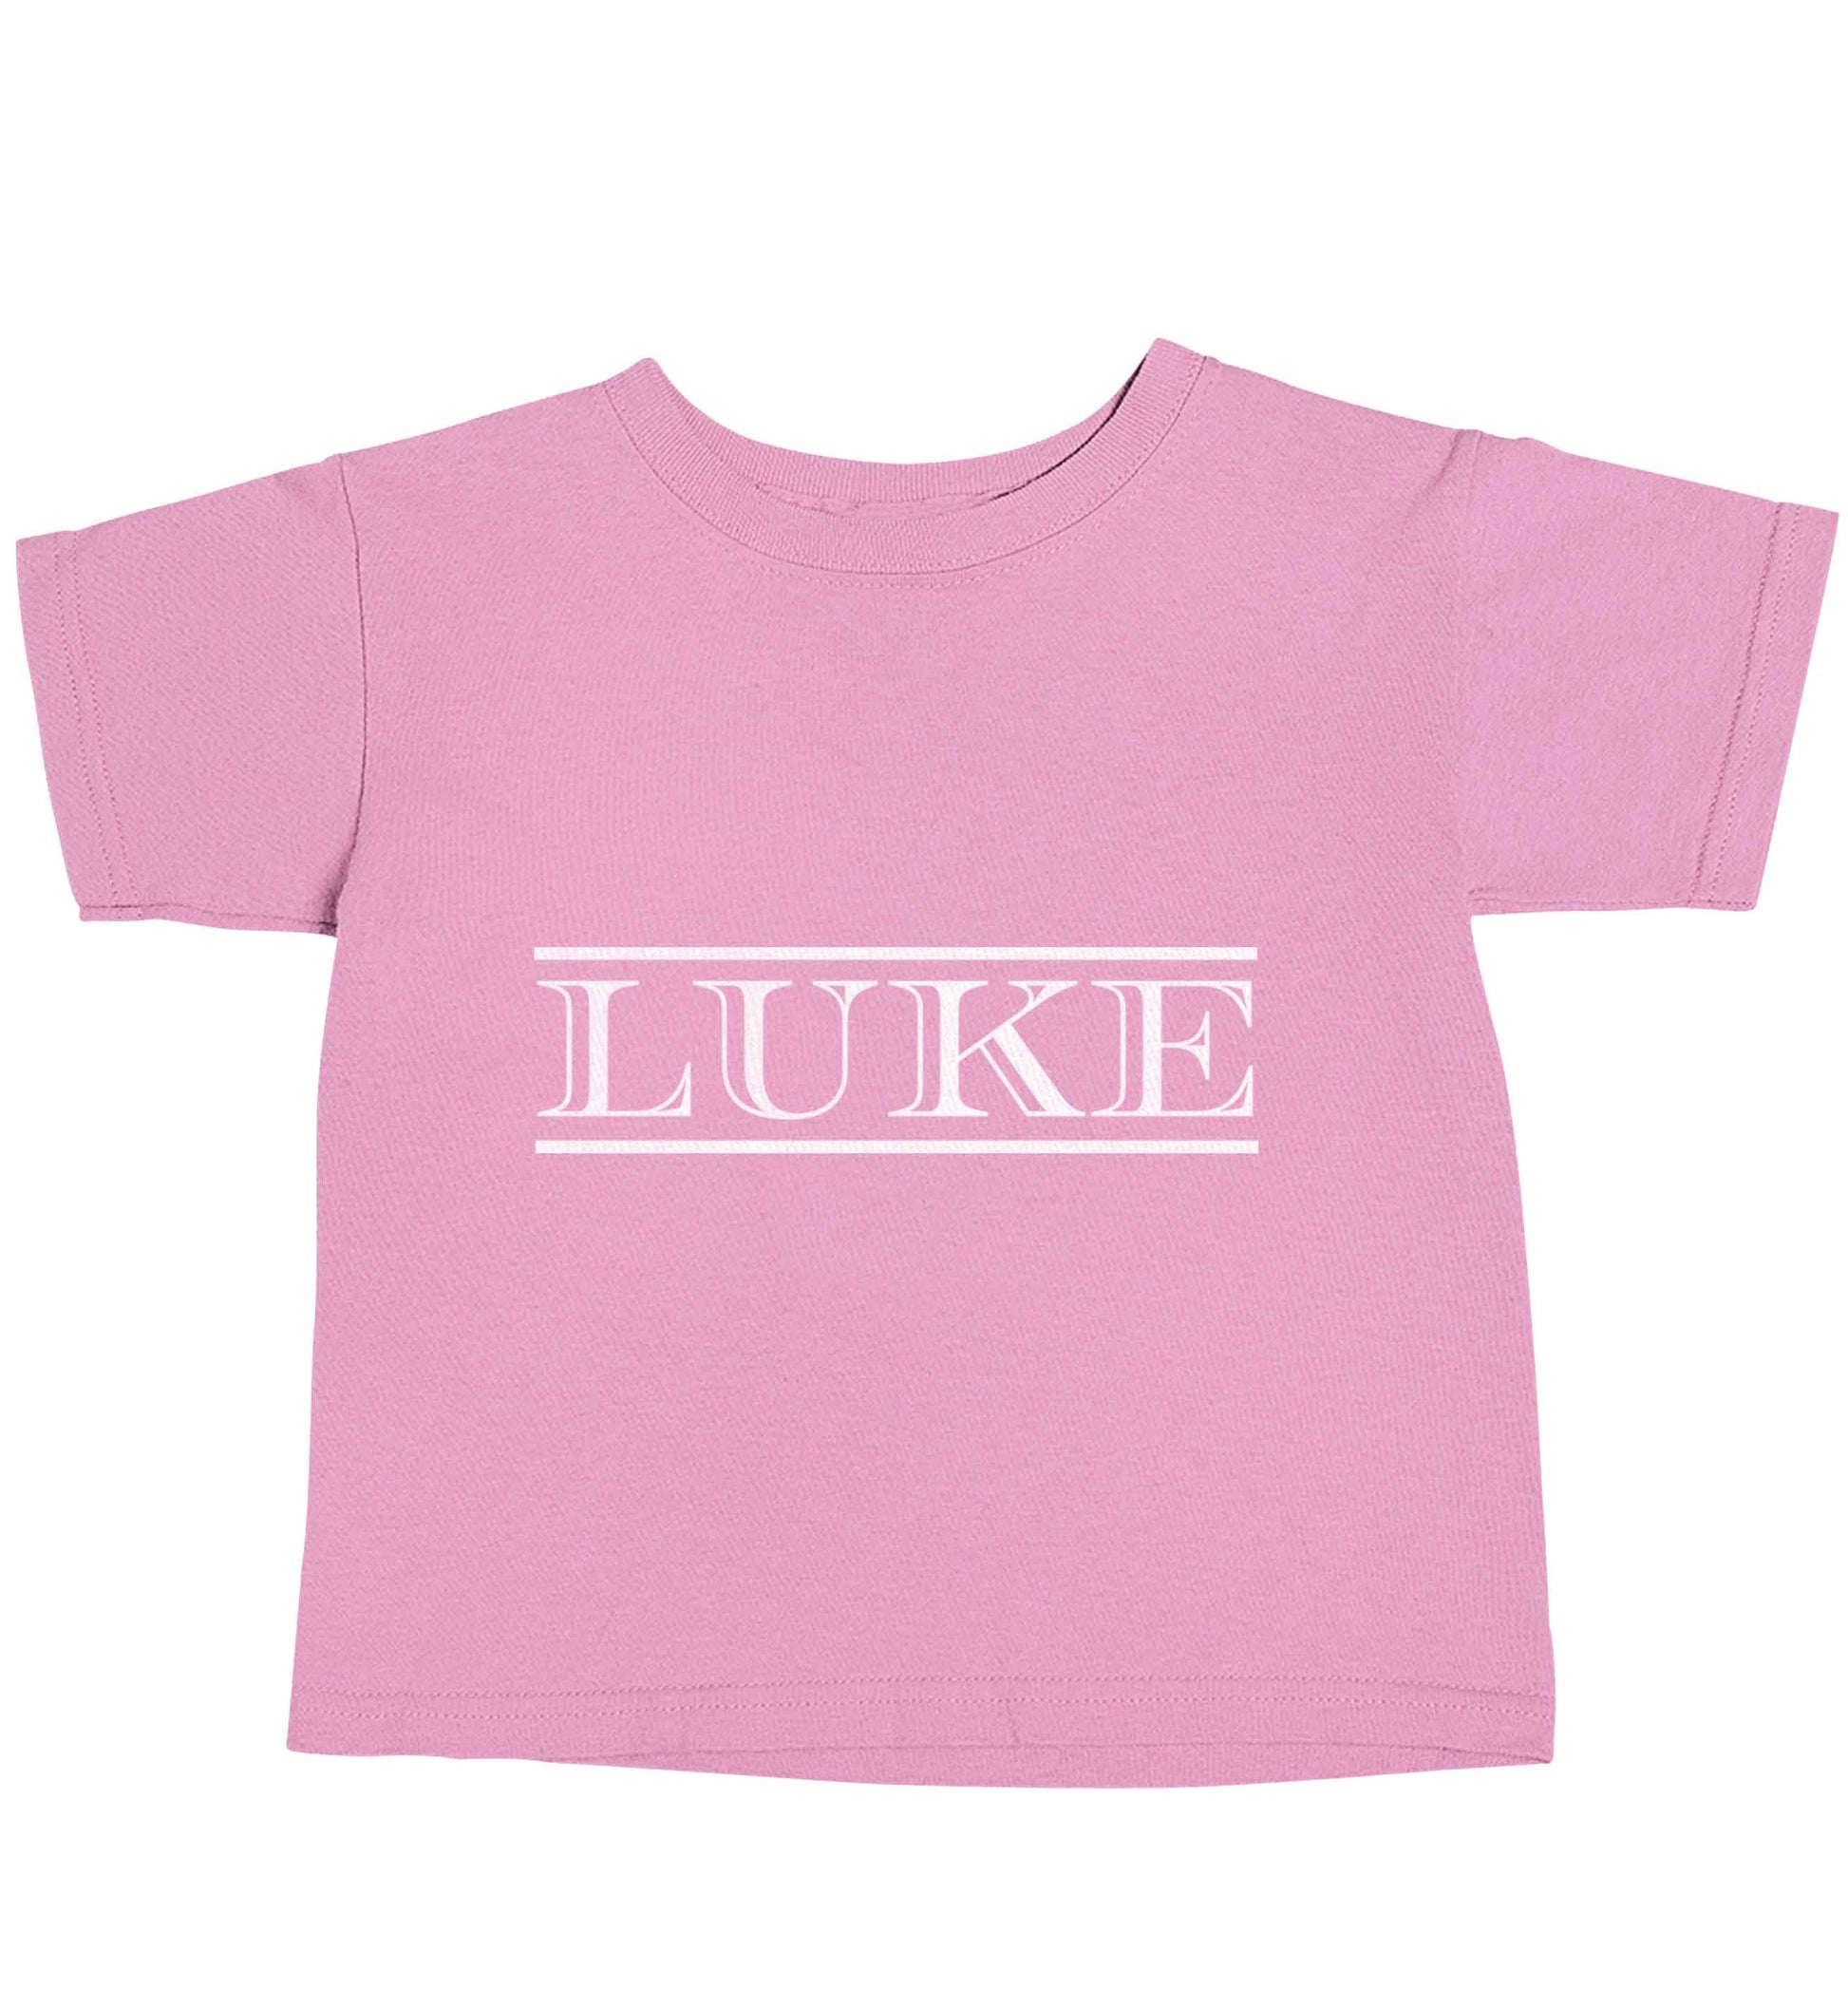 Personalised name light pink baby toddler Tshirt 2 Years